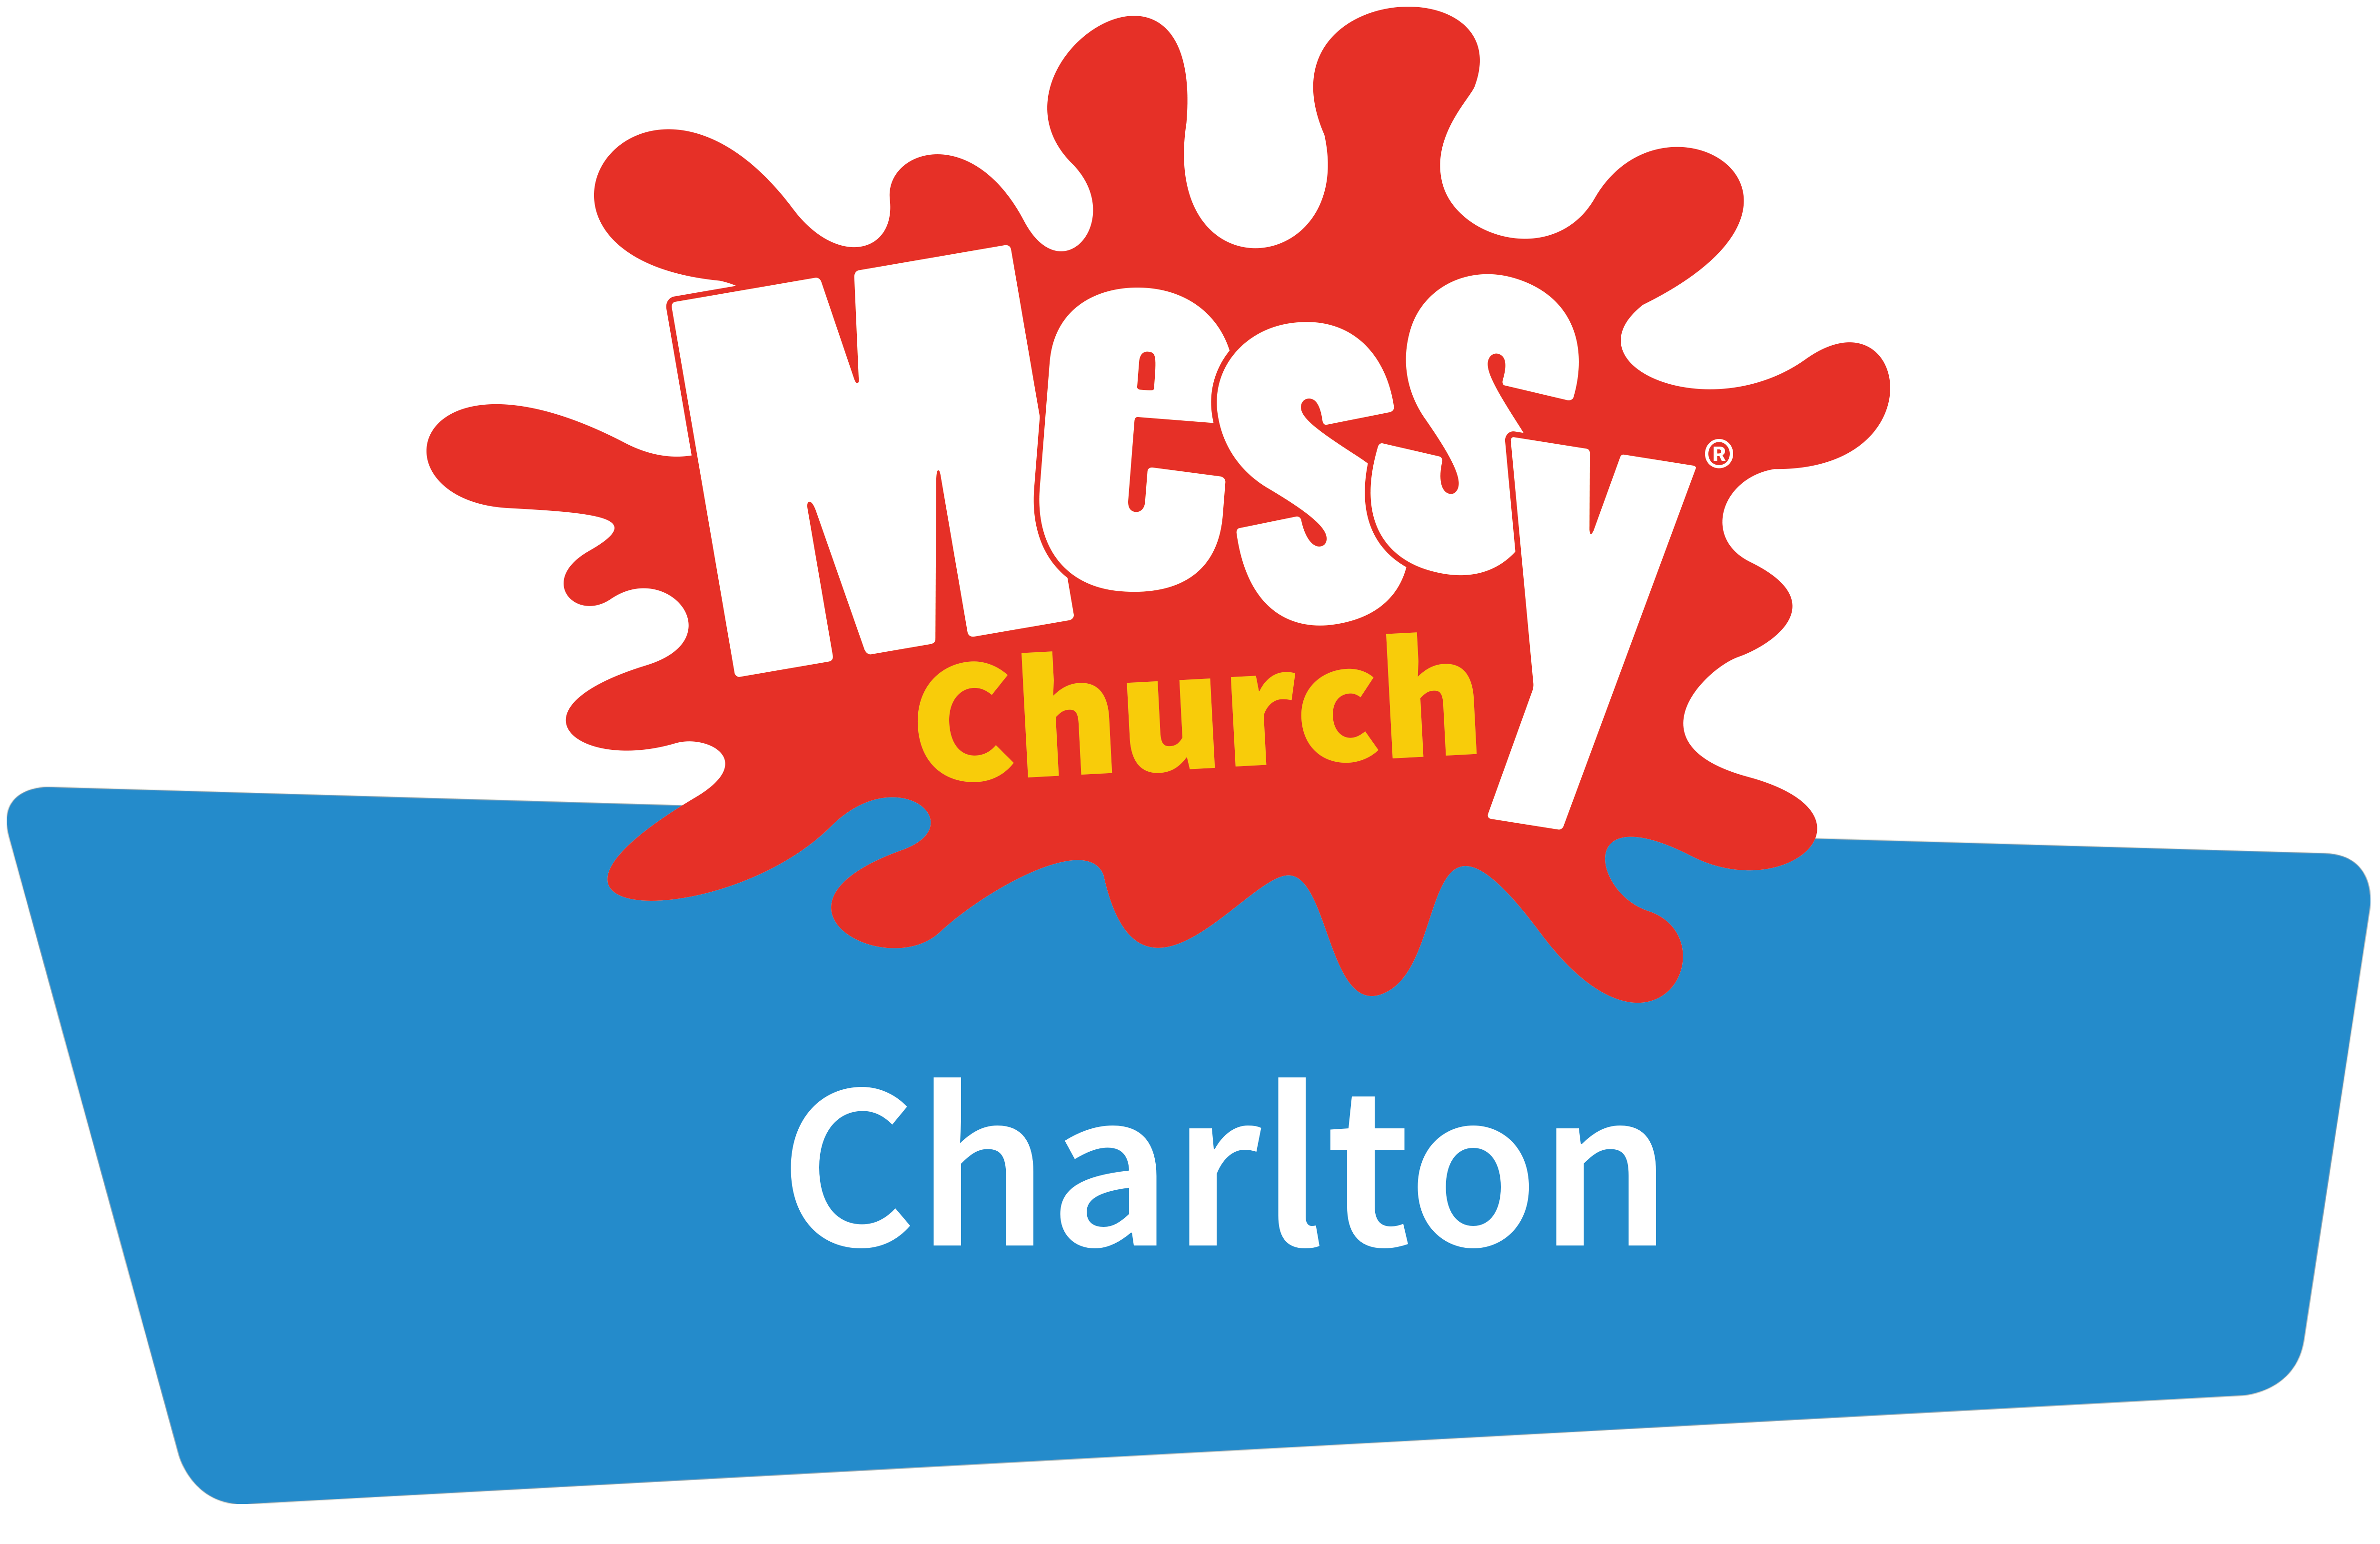 Messy Church on 18 June